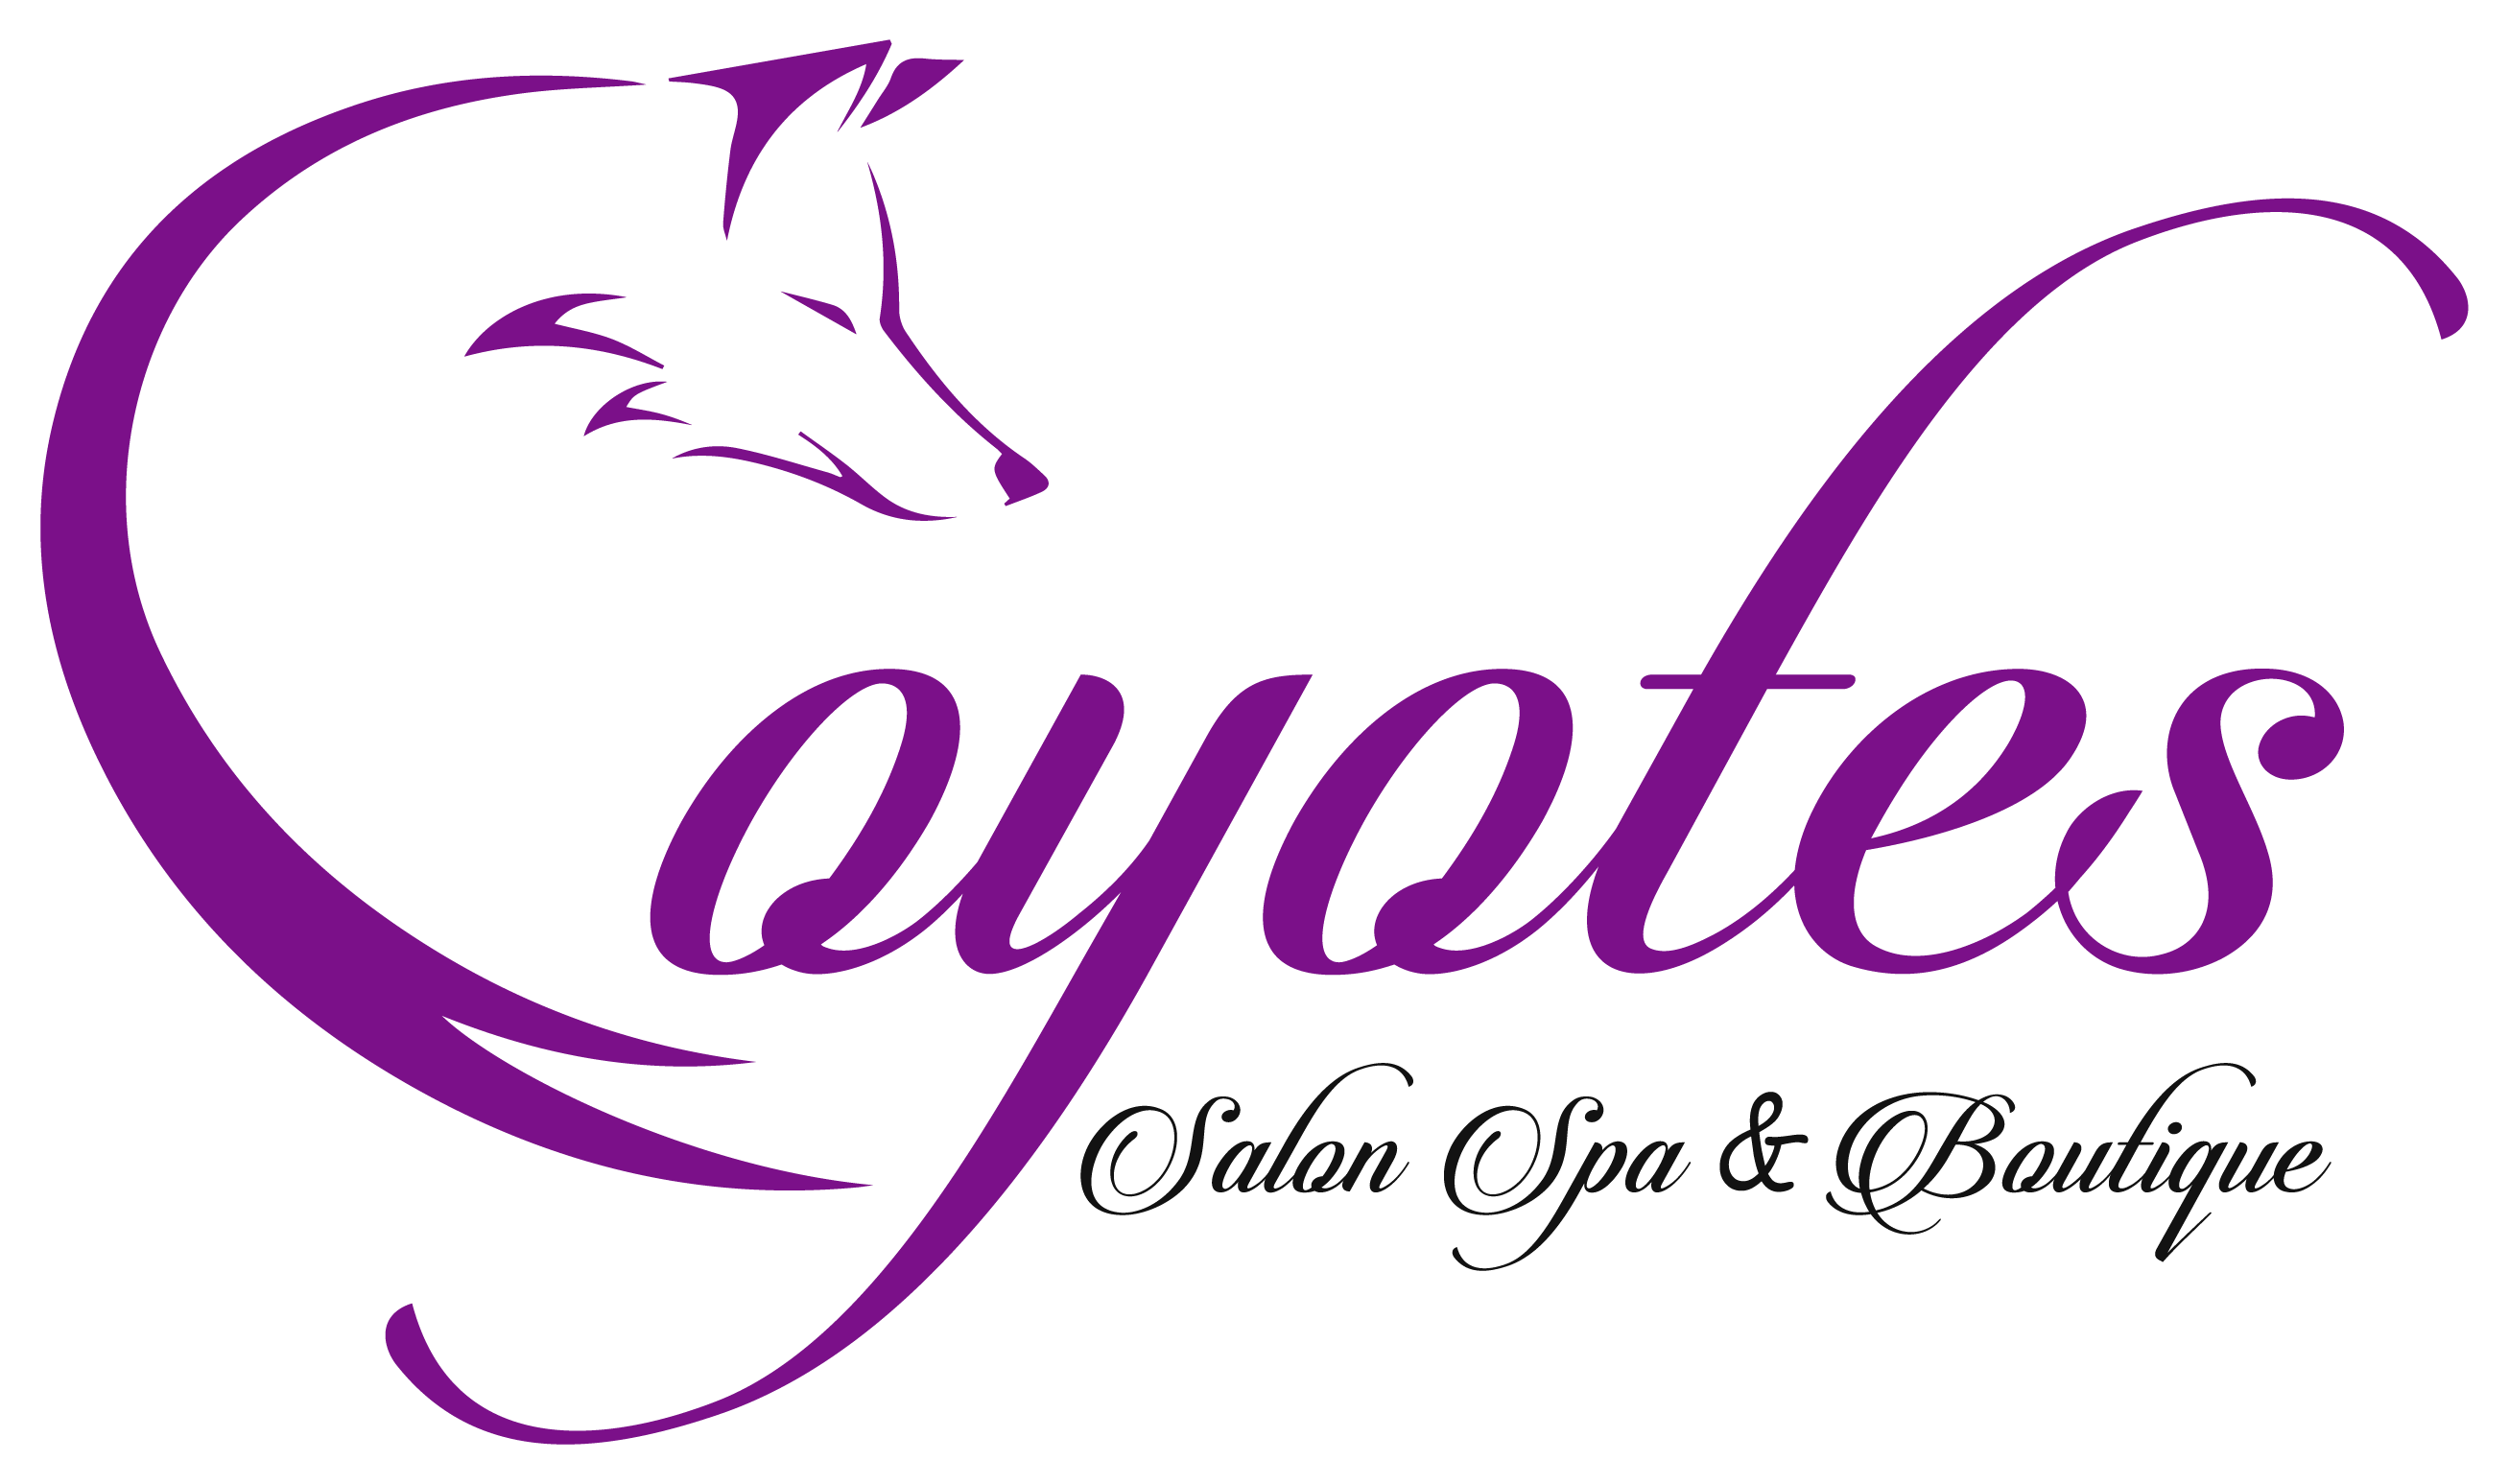 Coyotes Boutique